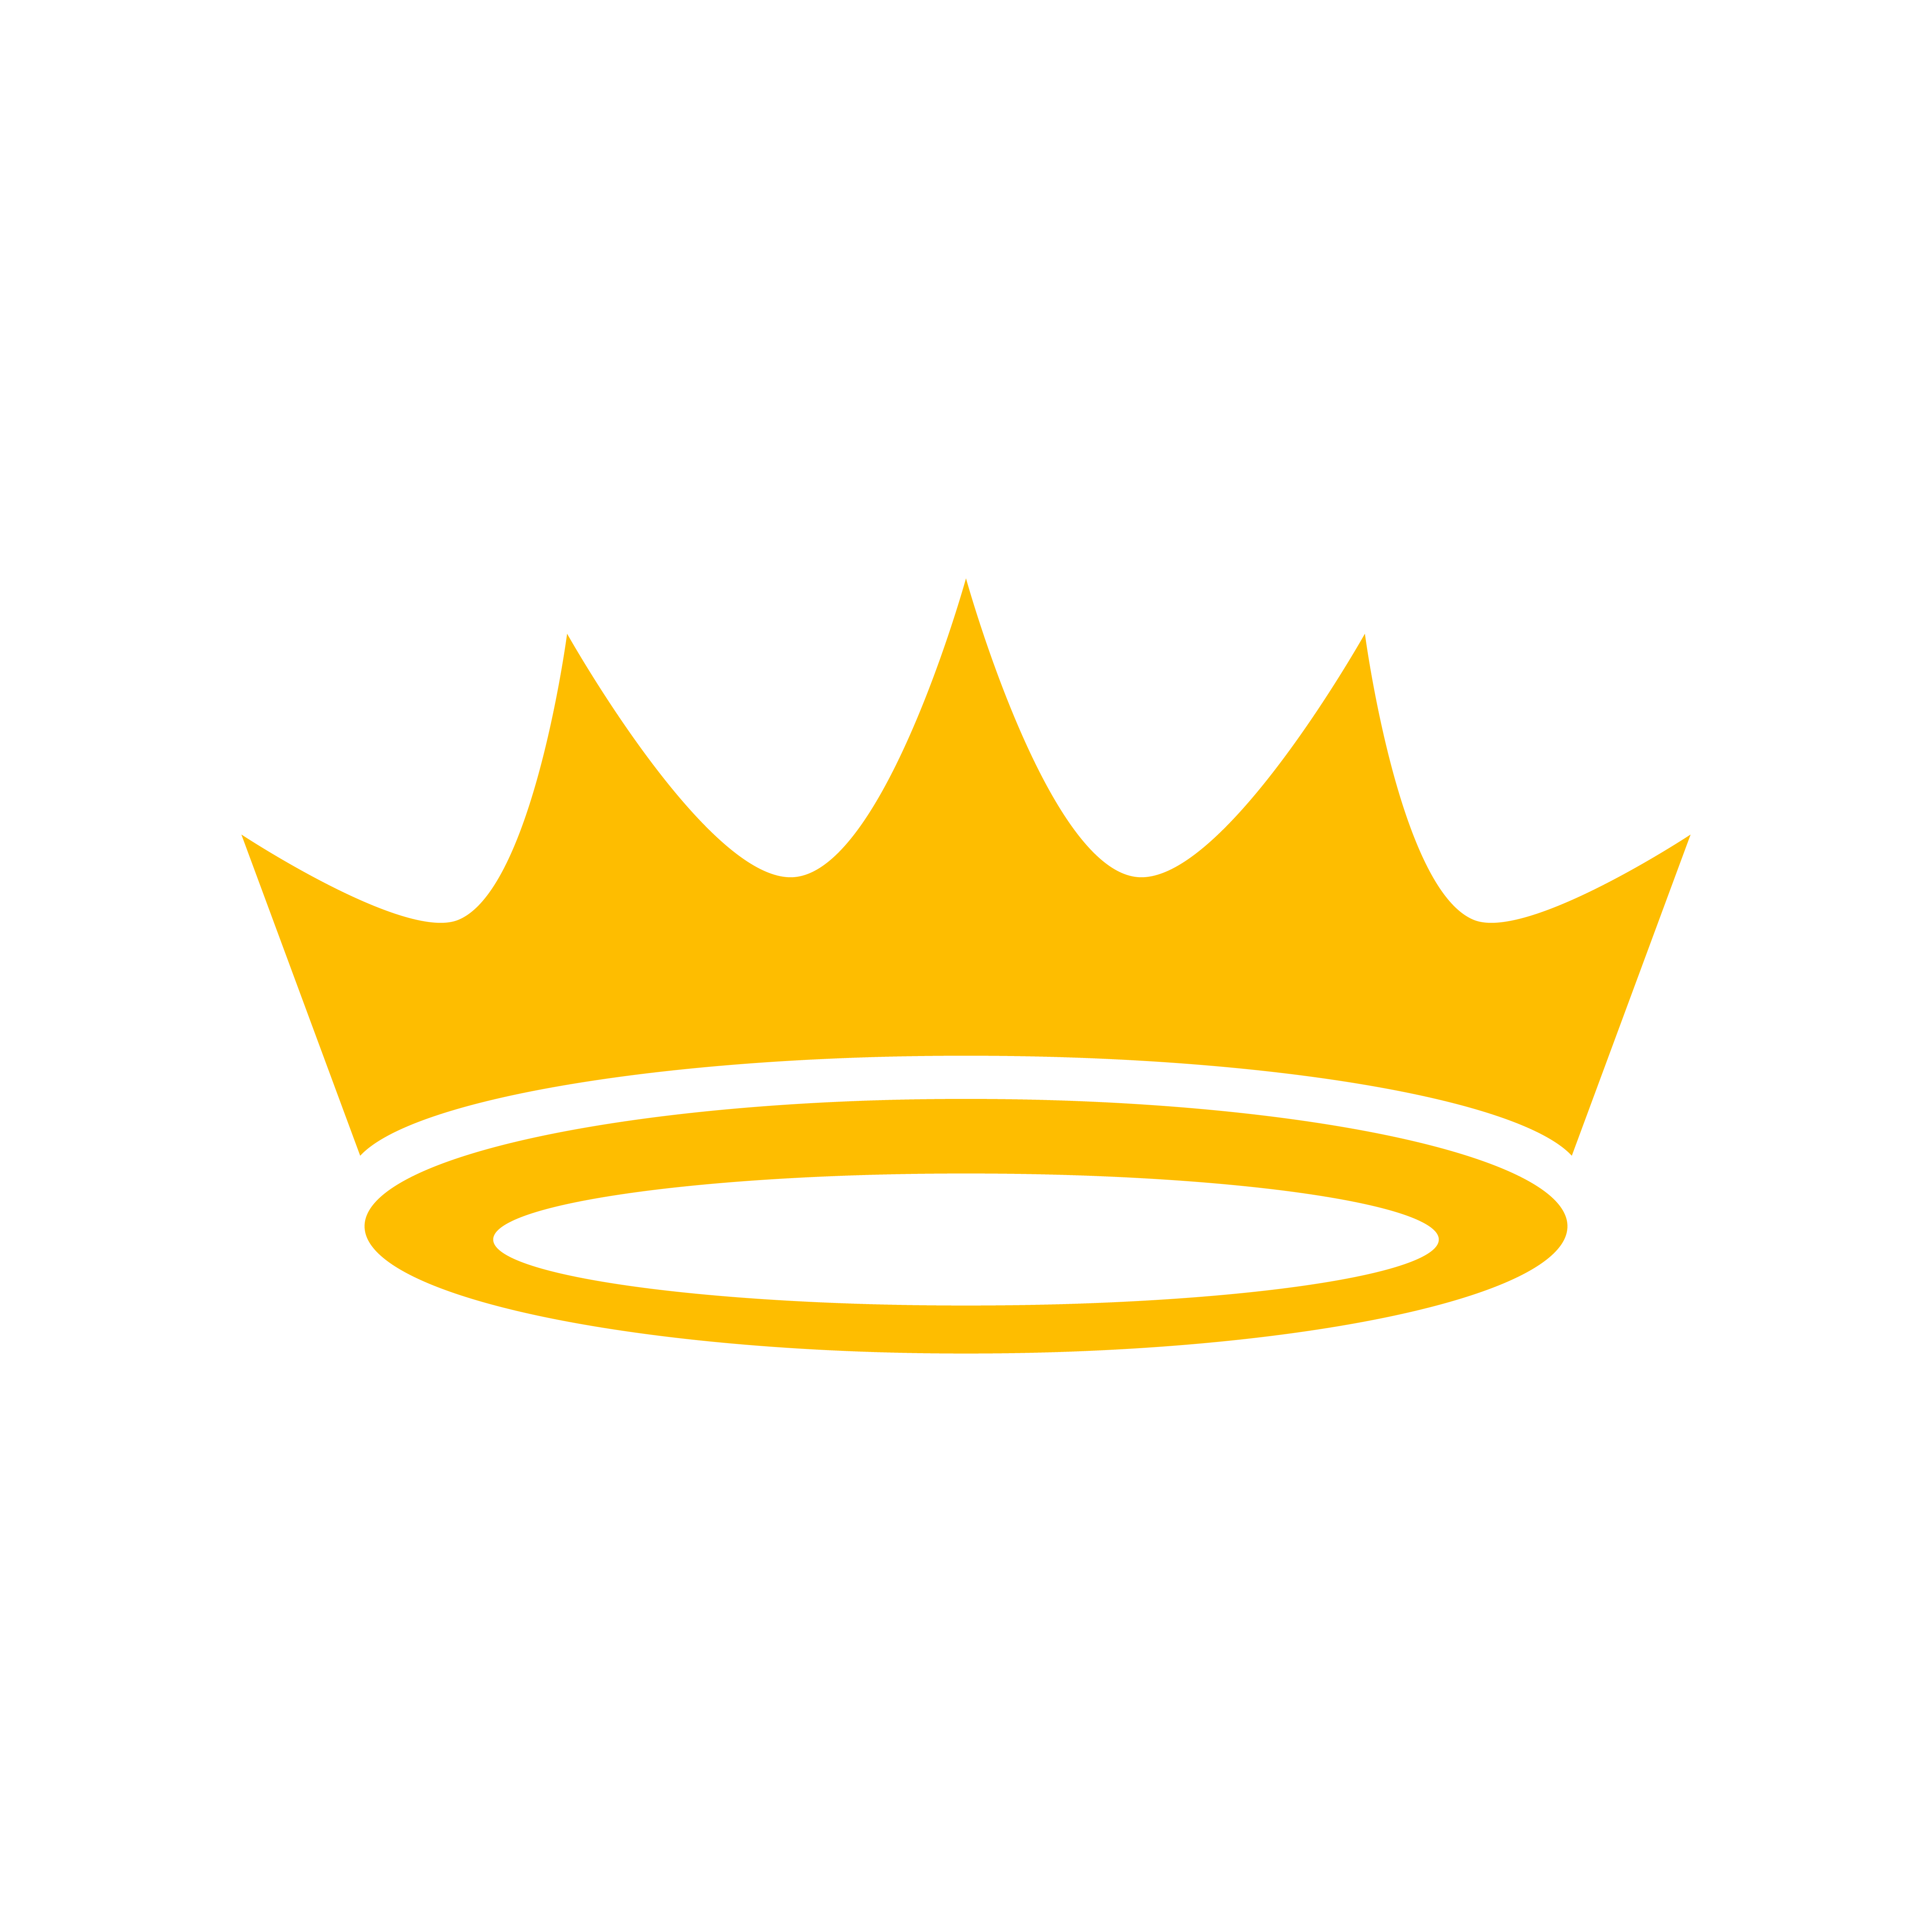 Royal crown vector icon - Download Free Vectors, Clipart ...